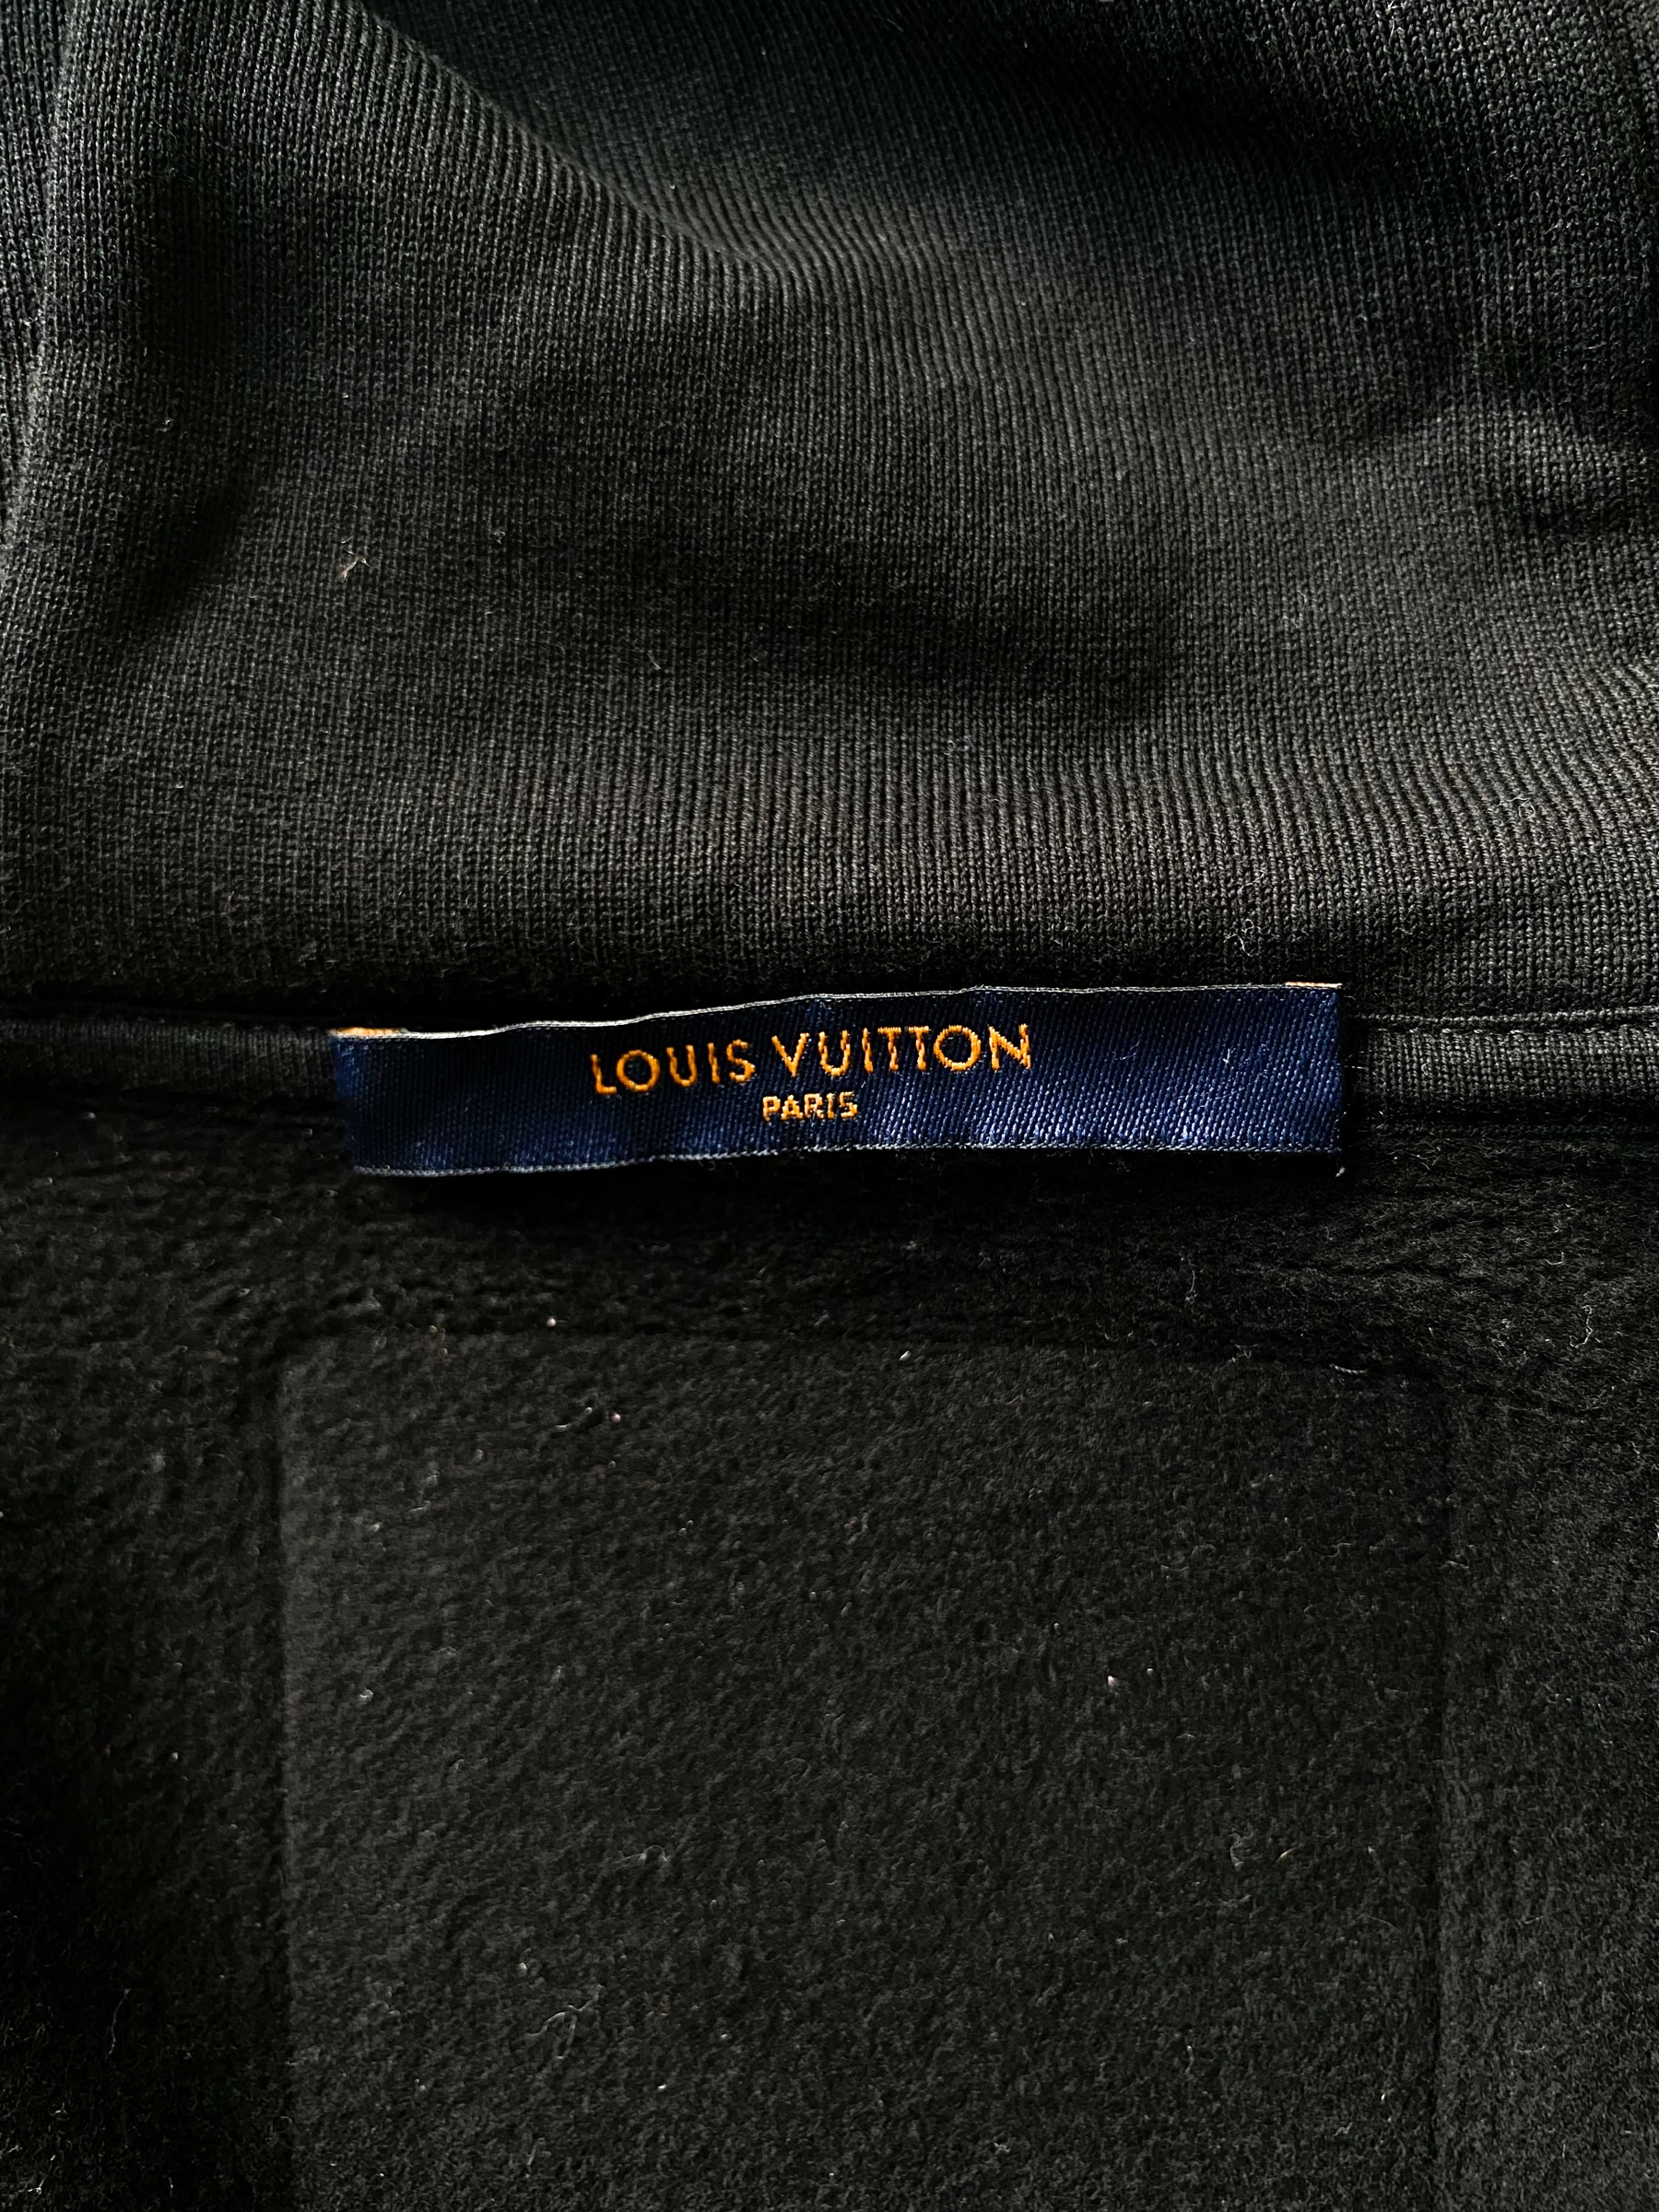 Louis Vuitton LV Planes Printed Black Hoodie